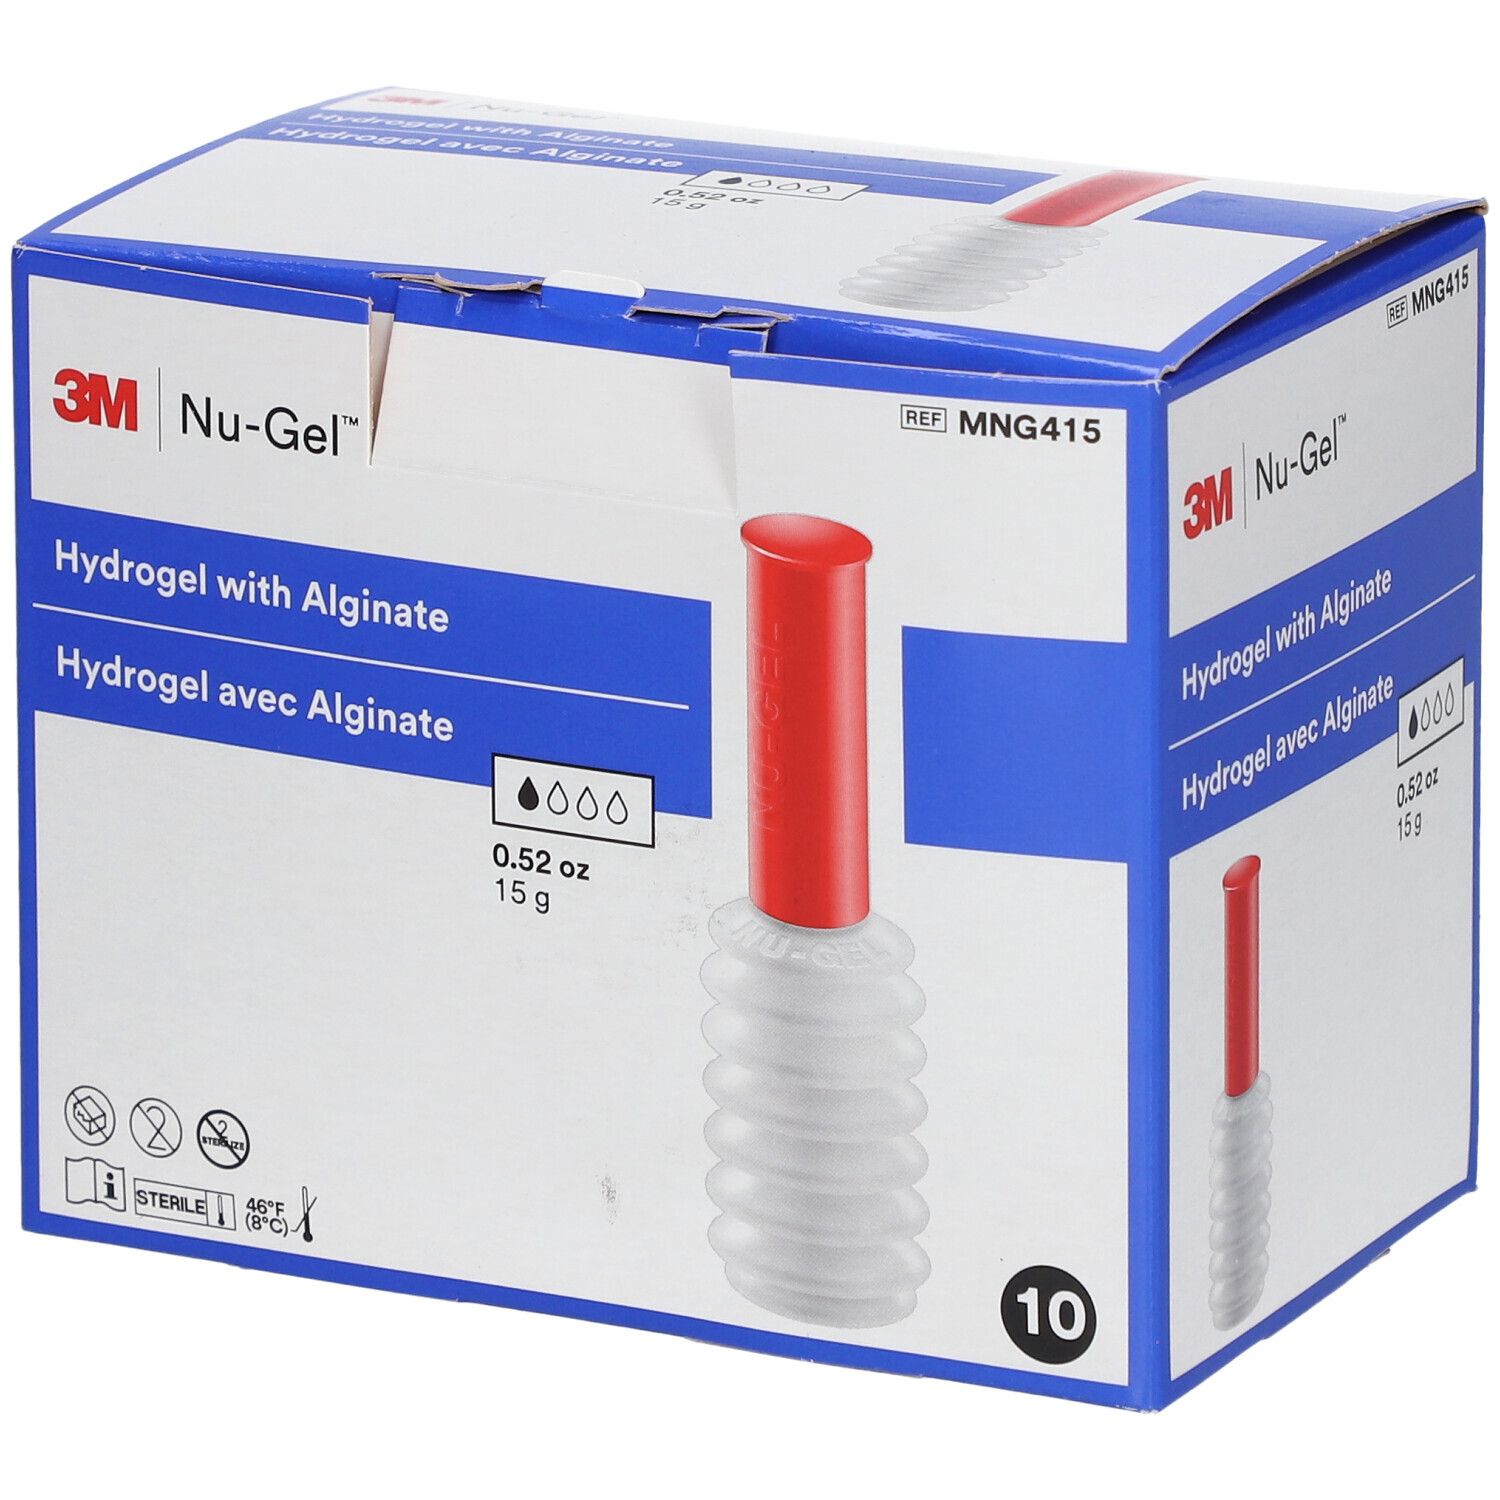 Nu-Gel® Hydrogel with alginate